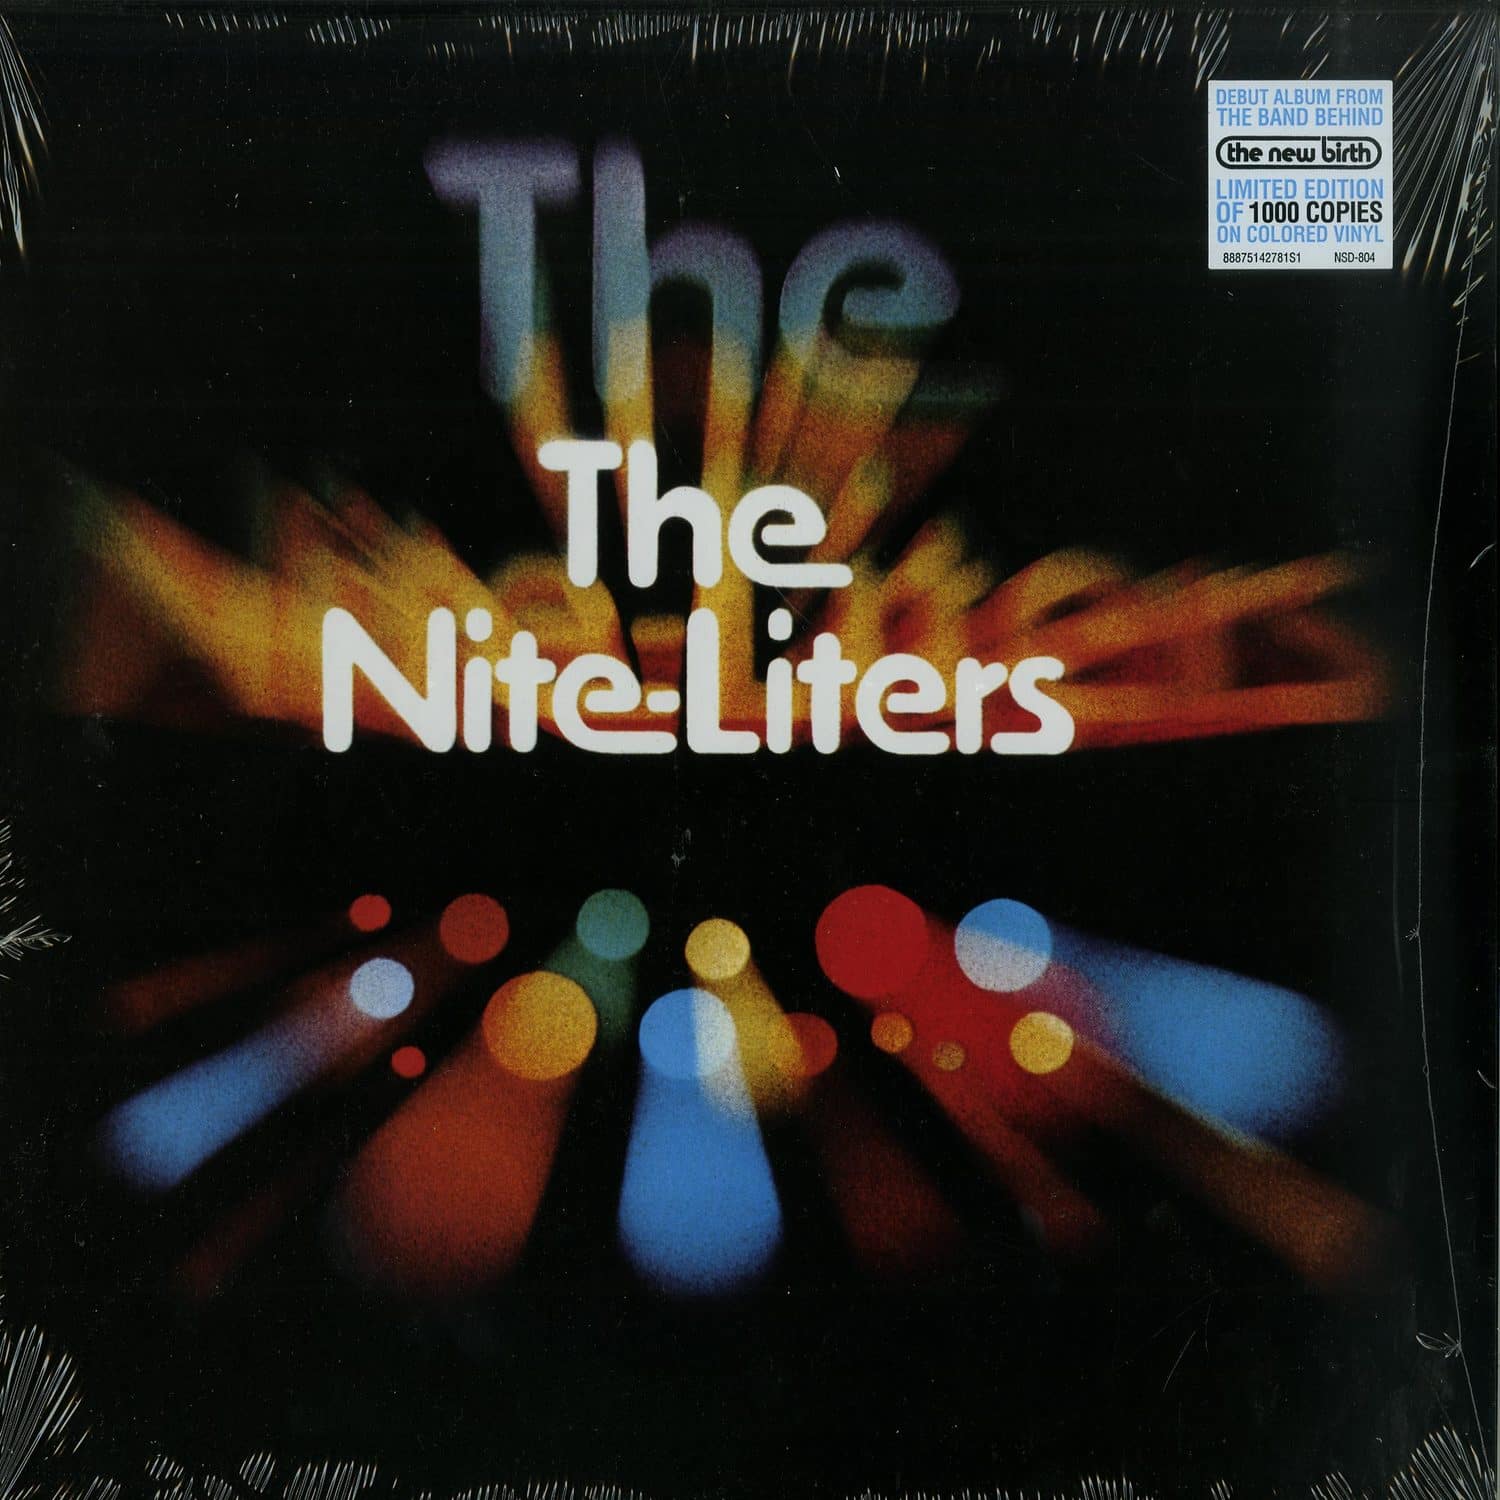 The Nite-Liters - THE NITE-LITERS 